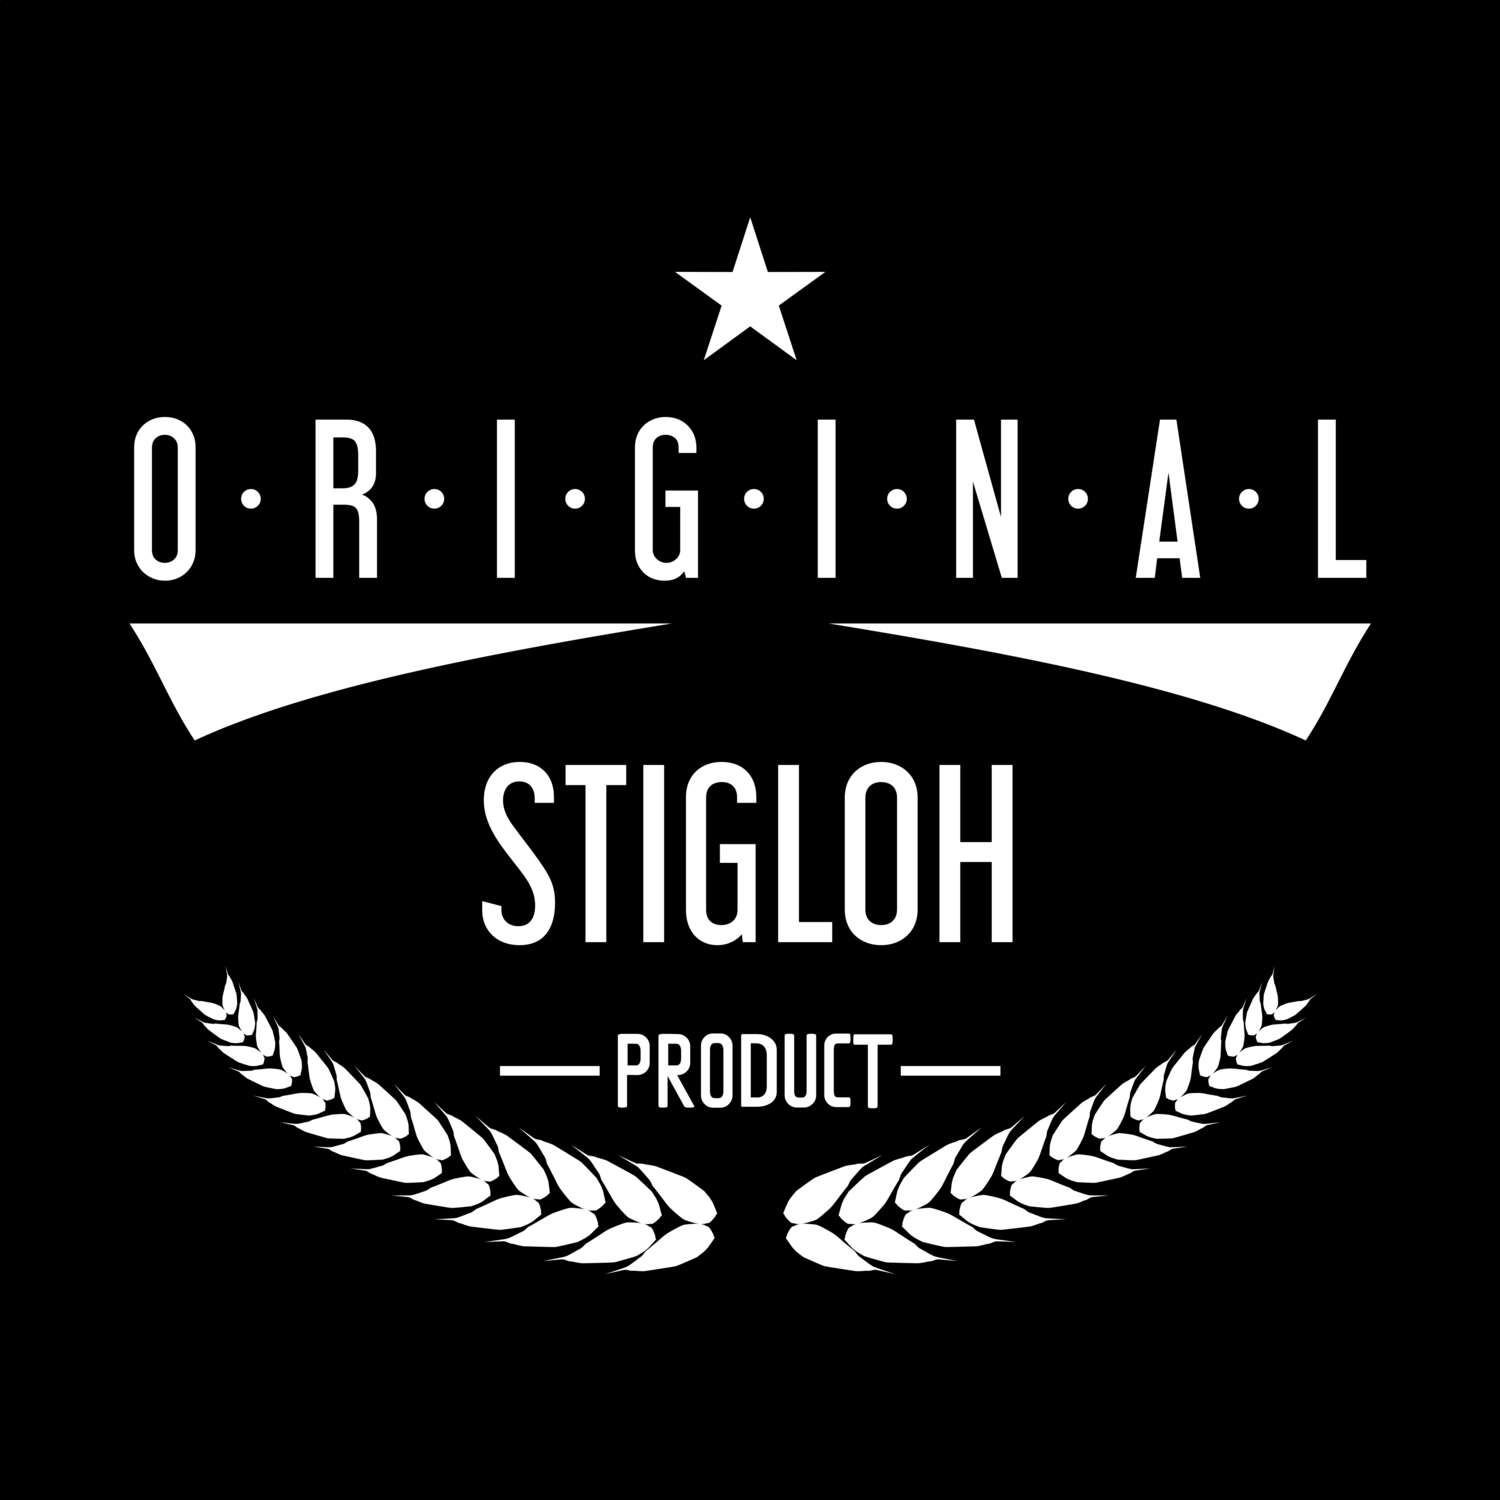 Stigloh T-Shirt »Original Product«